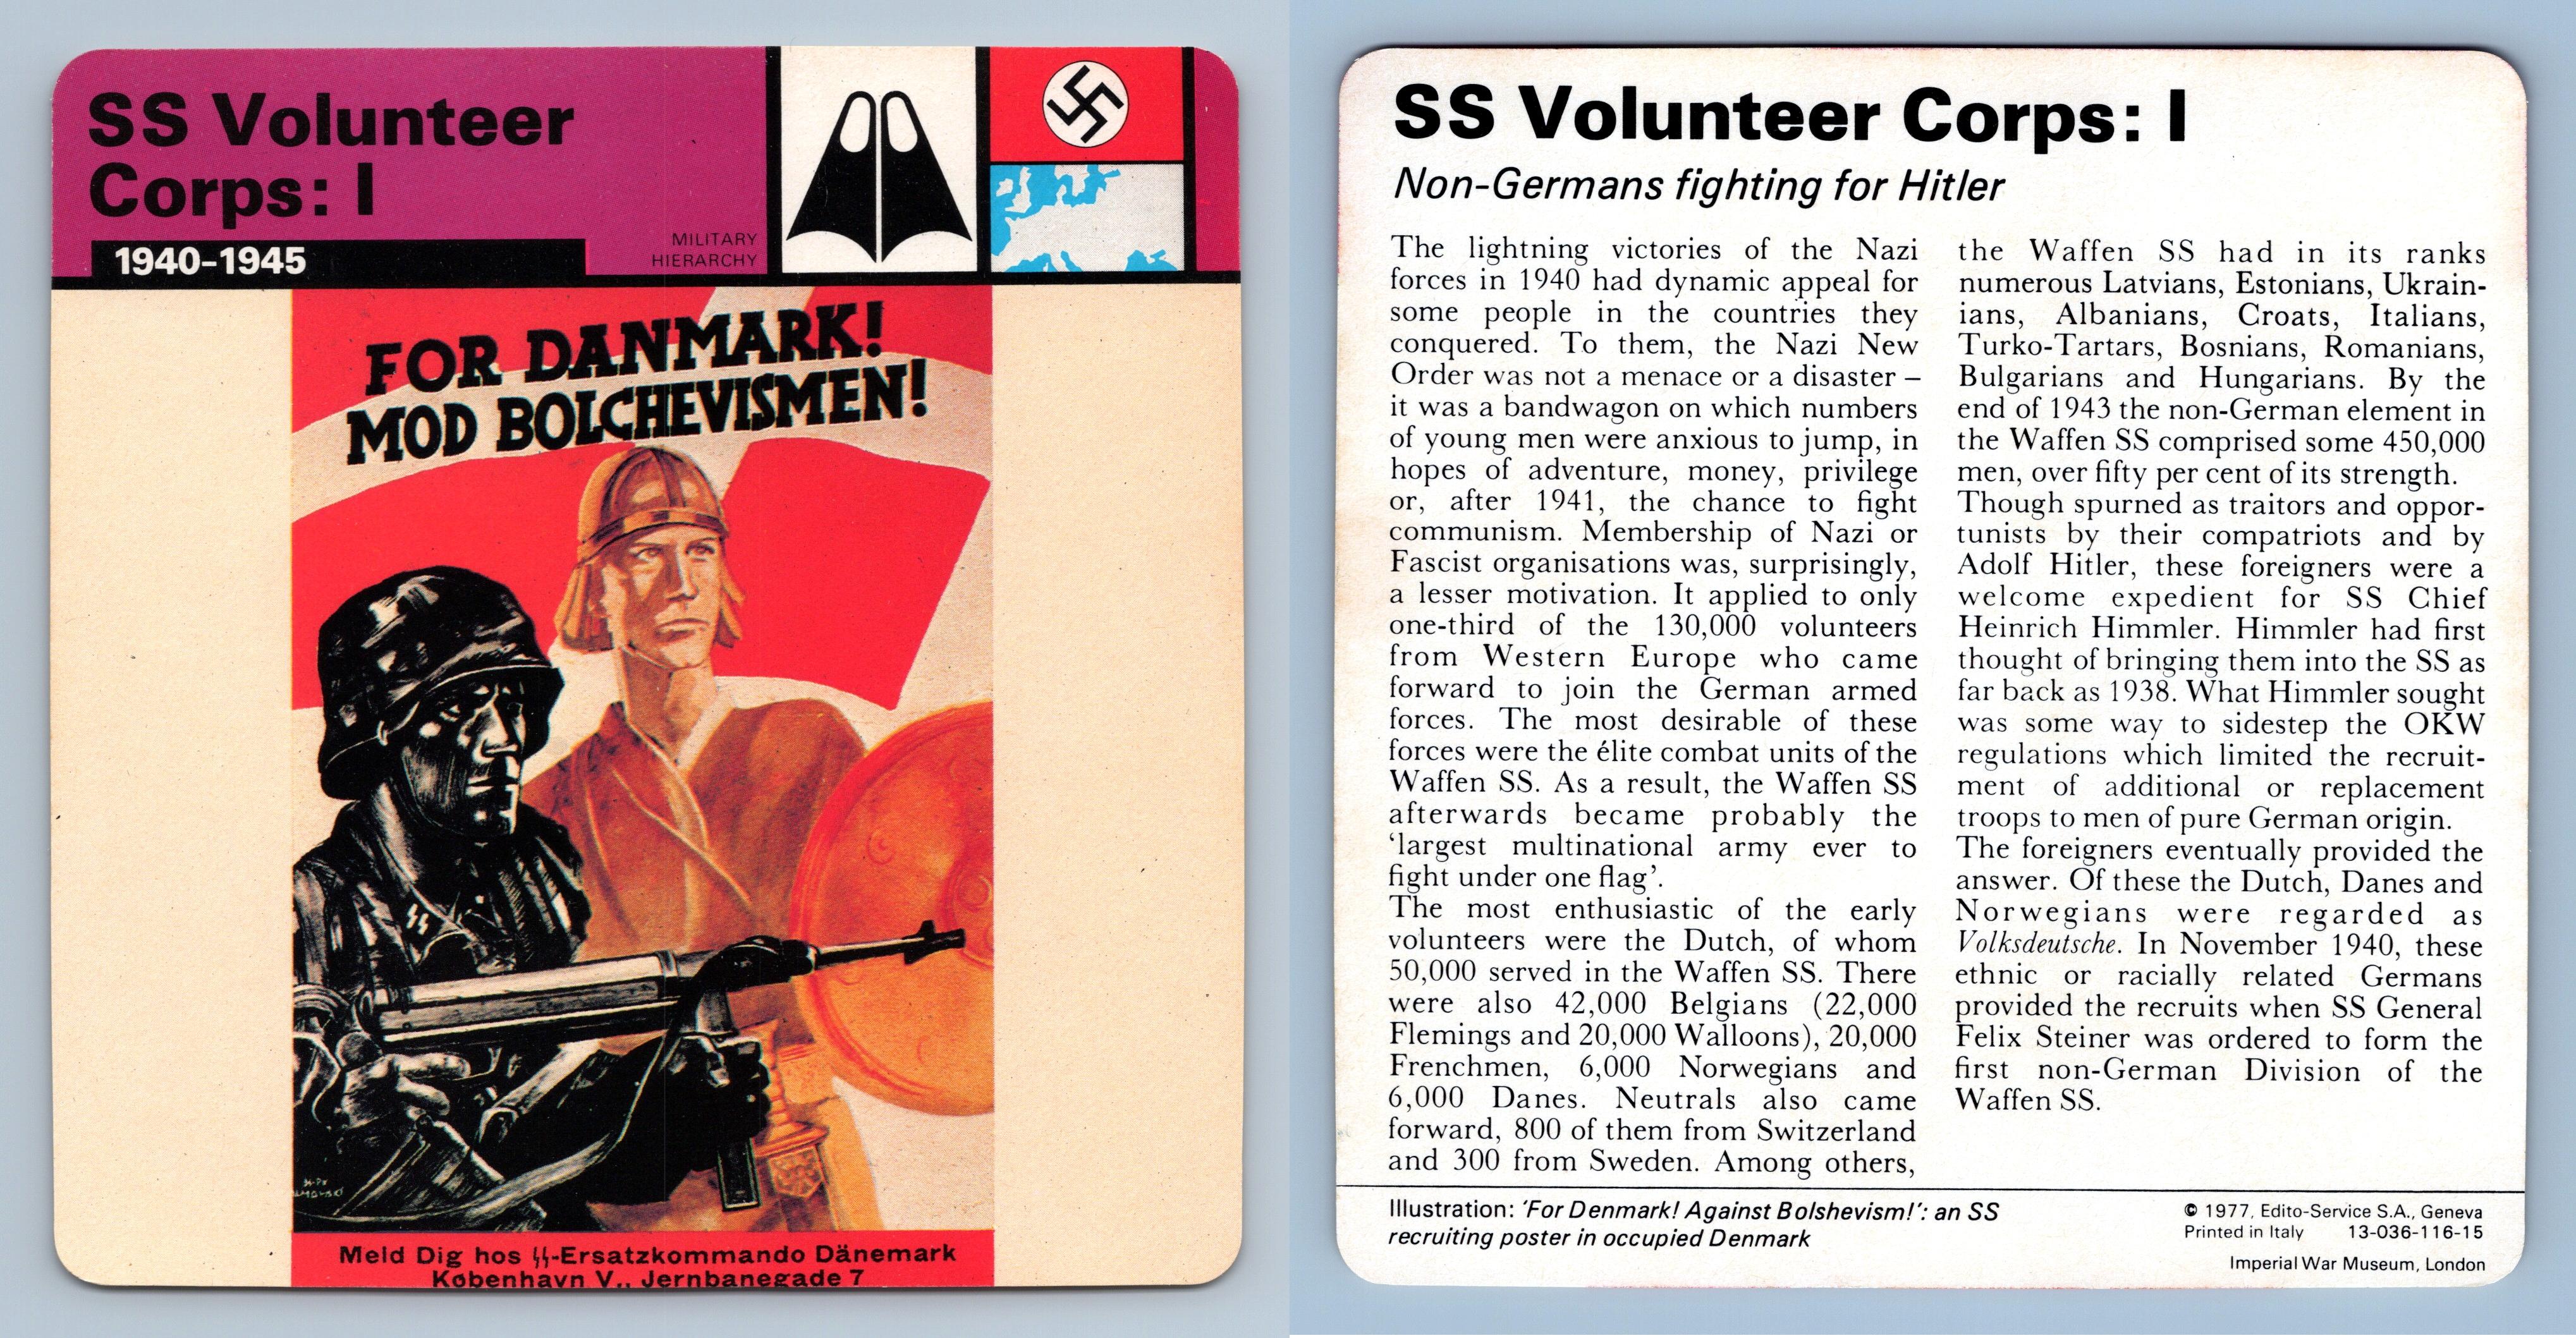 SS Legion Badges : II 1940-45 Military WW2 Edito-Service SA 1977 Card 